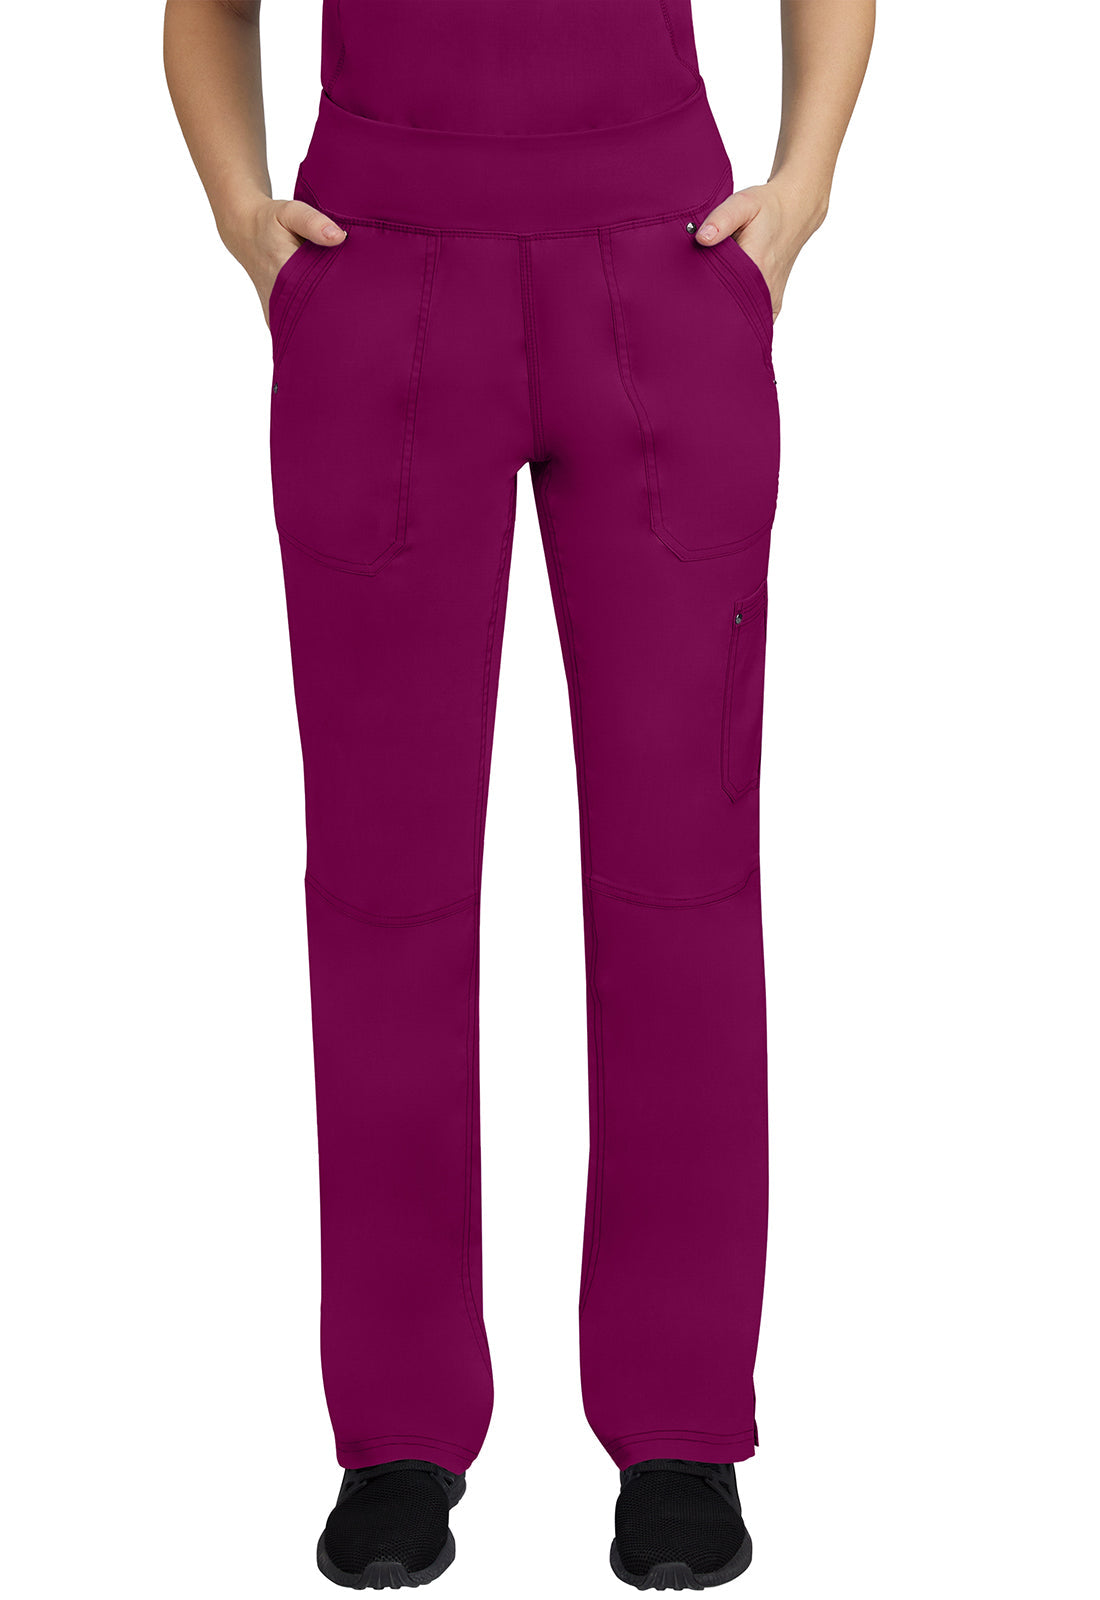 Healing Hands Purple Label Tori Yoga Pants (Petite Up to XL